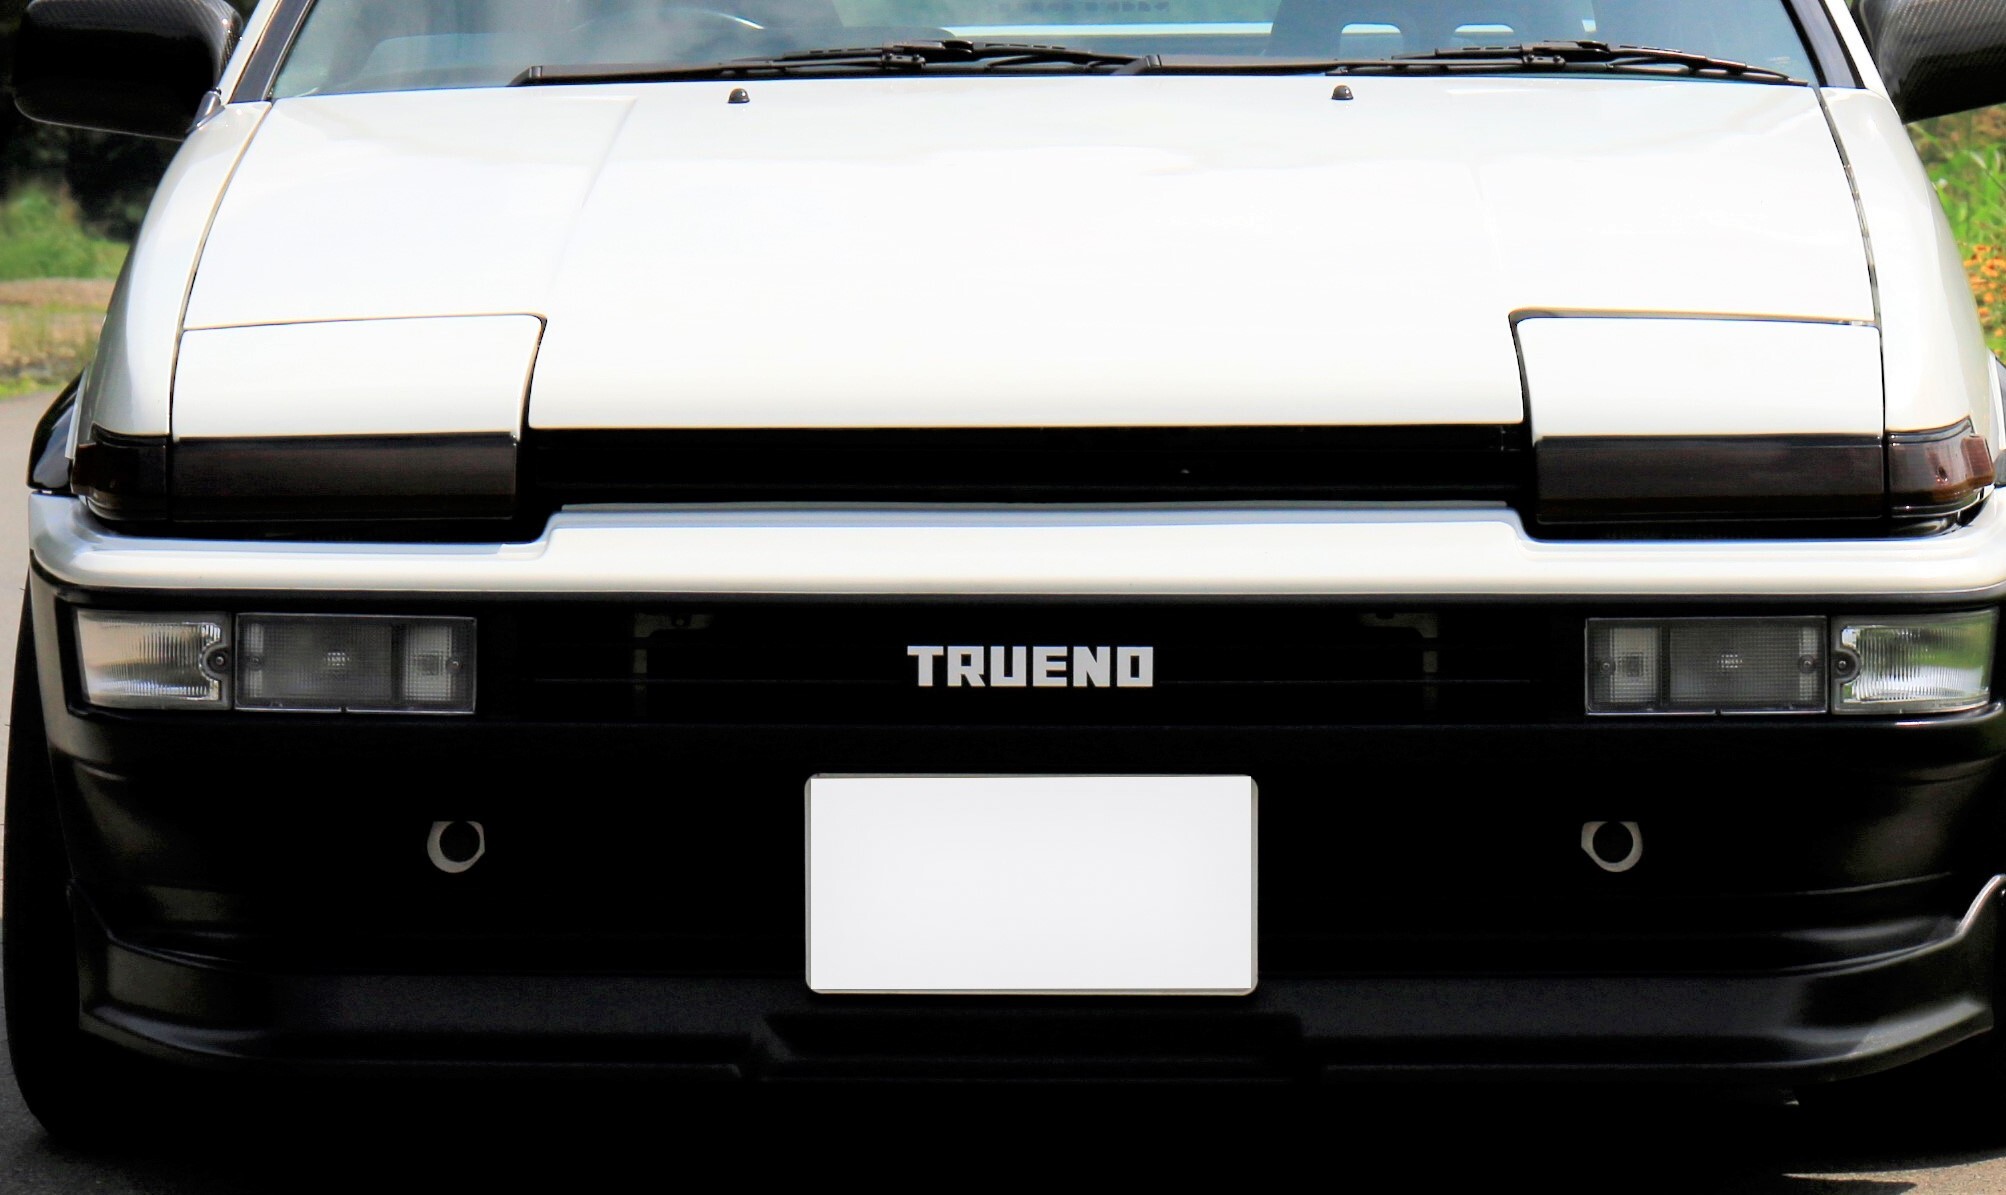 Ae86トレノを18歳で購入し11年 最初のクルマが アガリ になるまで惚れ込んだ理由とは Bestcar Classic オーナーズボイスvol 8 自動車情報誌 ベストカー